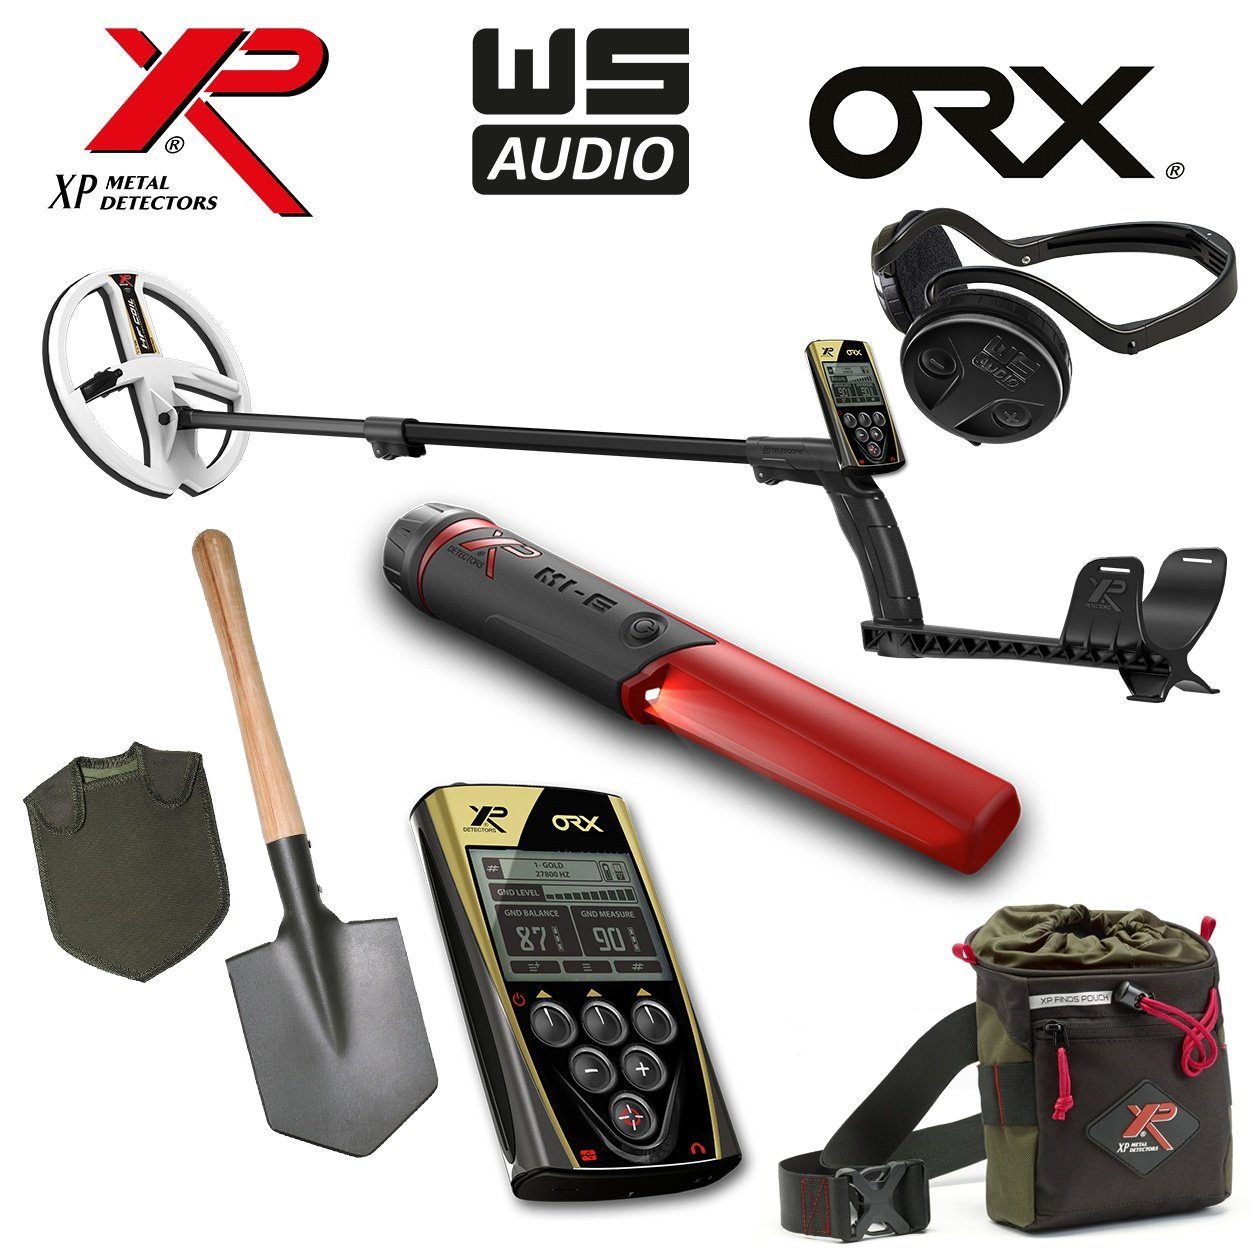 XP Metalldetektor XP ORX 22 HF RC WS Audio Komplettset